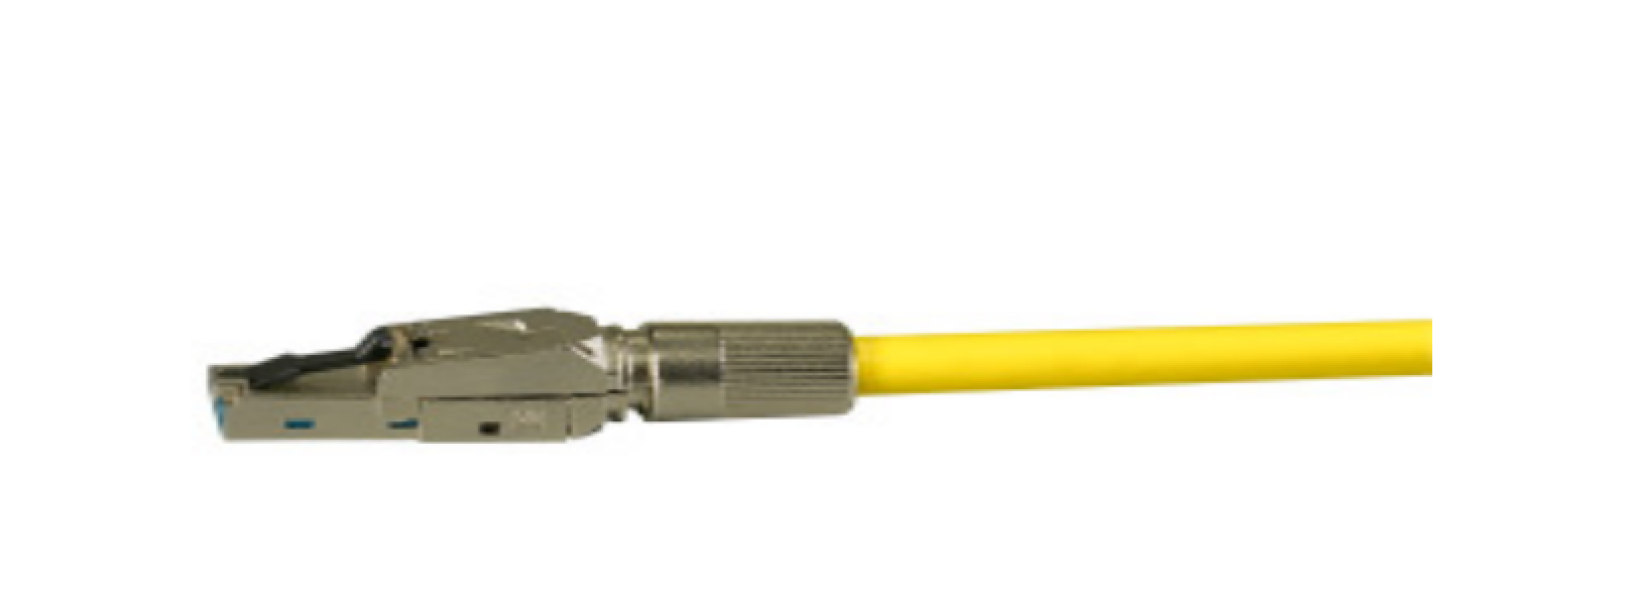 Plug RJ45 Micro Tek diametro max cavo 9mm argento - 88035.2 02